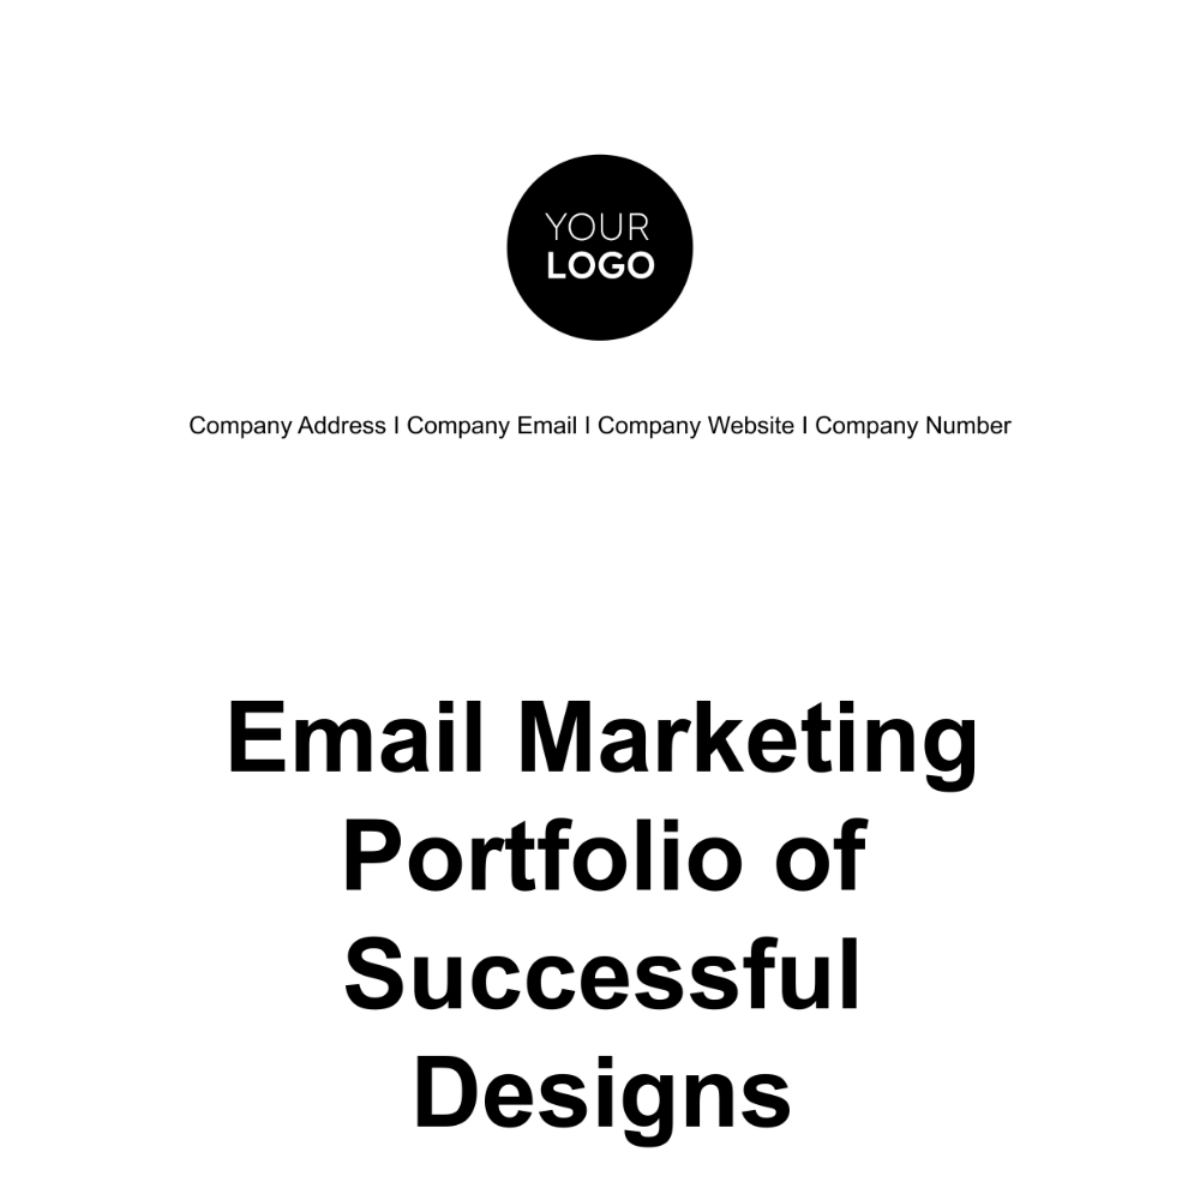 Email Marketing Portfolio of Successful Designs Template